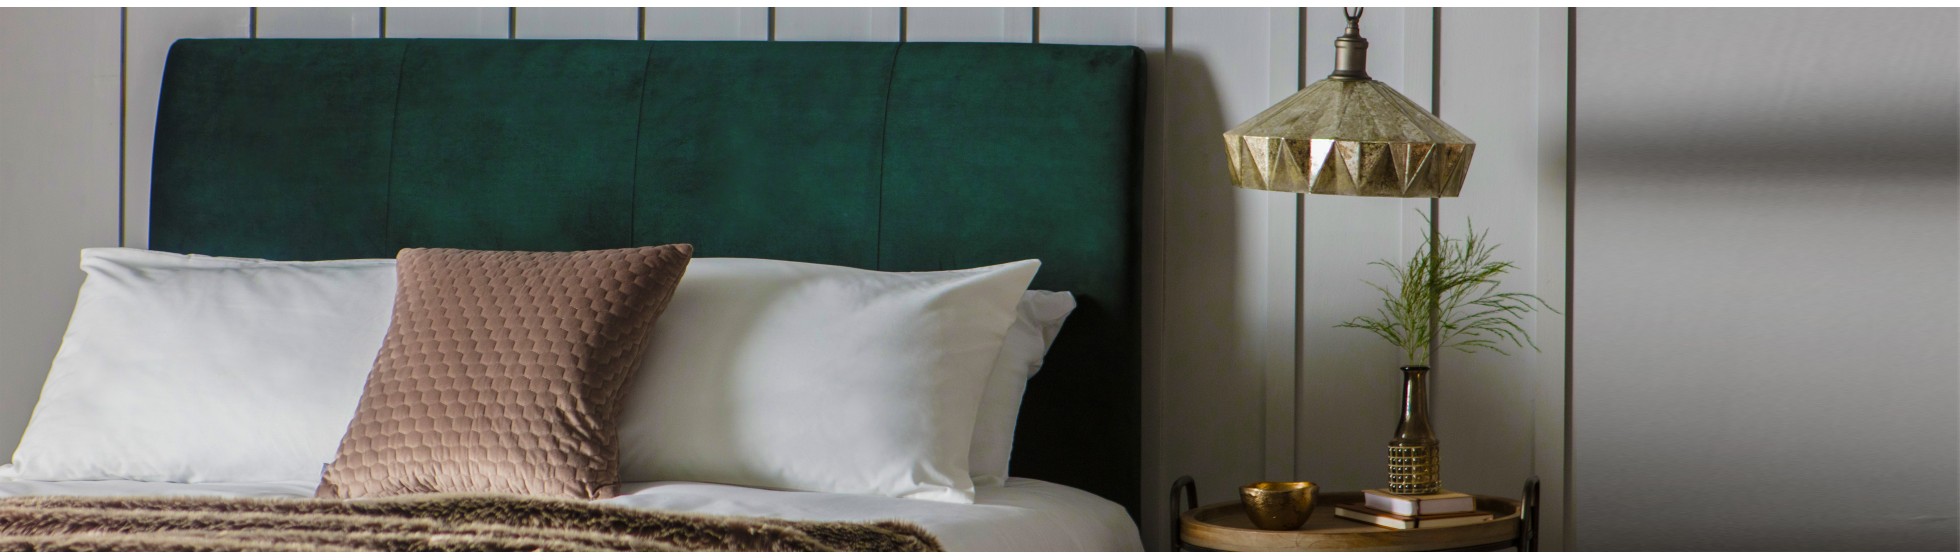 Affordable Memory Foam Mattresses, Pillows & Beds | Comfortlux